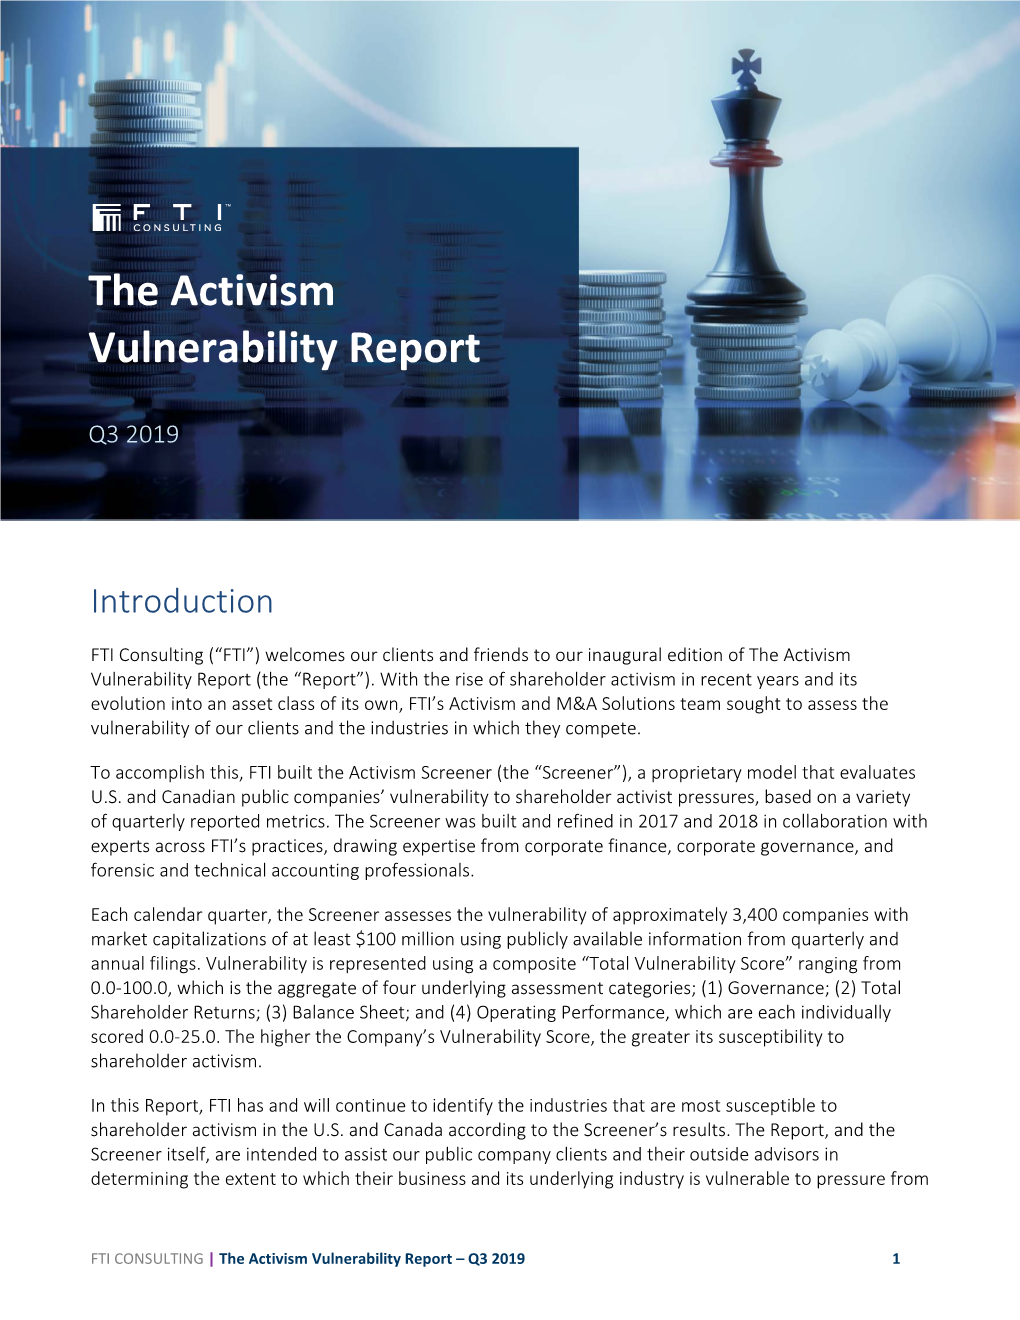 FTI CONSULTING | the Activism Vulnerability Report – Q3 2019 1